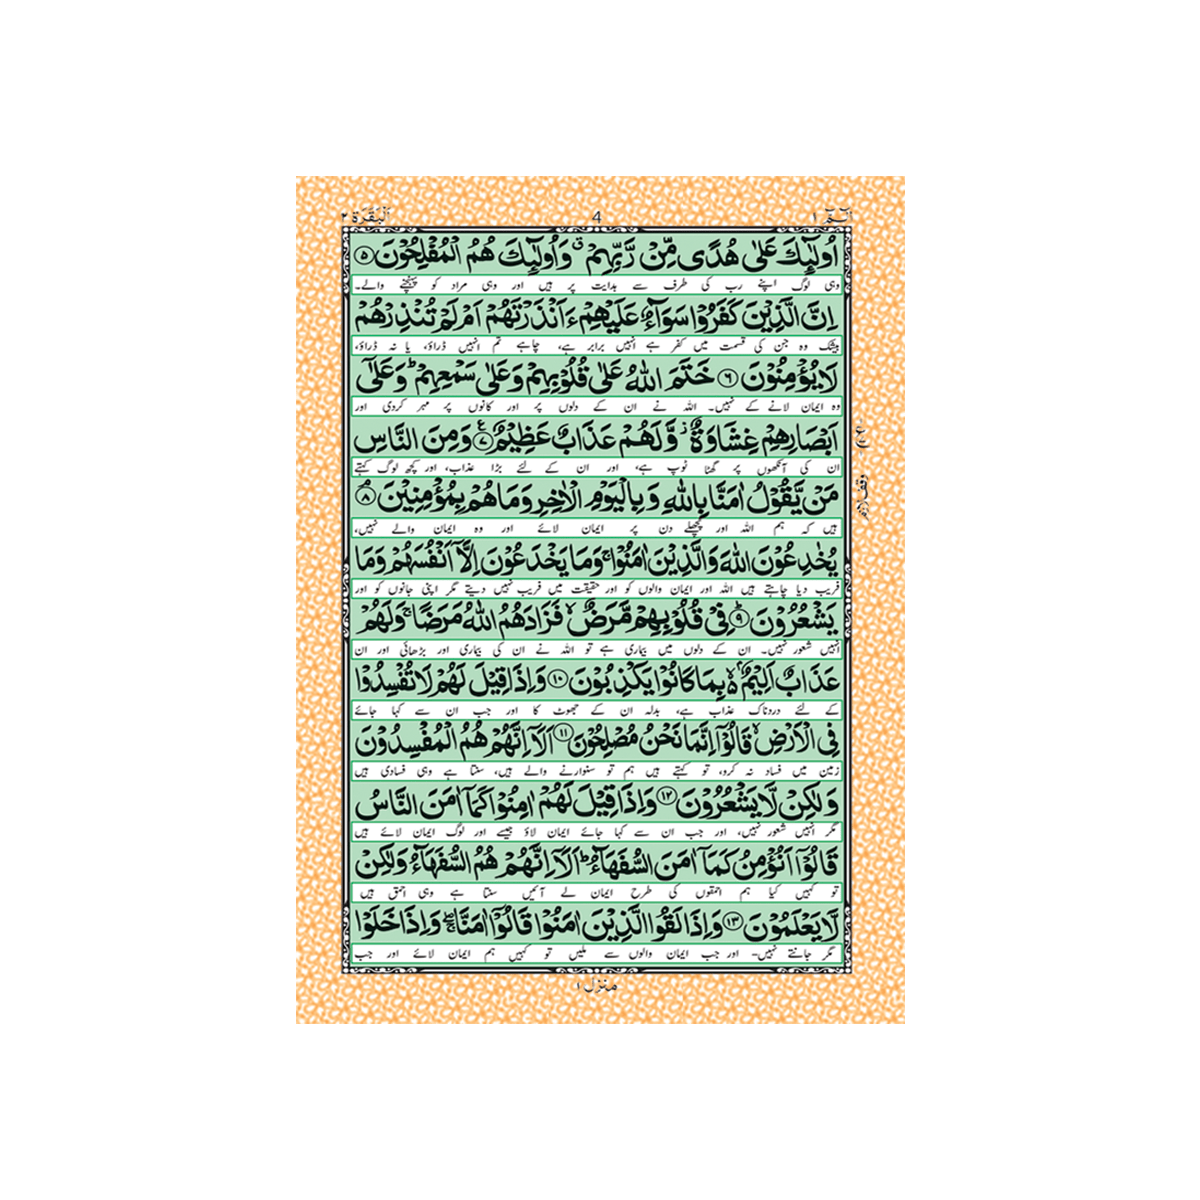 [11/V] Al-Quran-Ul-Kareem With Kanzul Iman (Urdu Translation) - Gift Edition